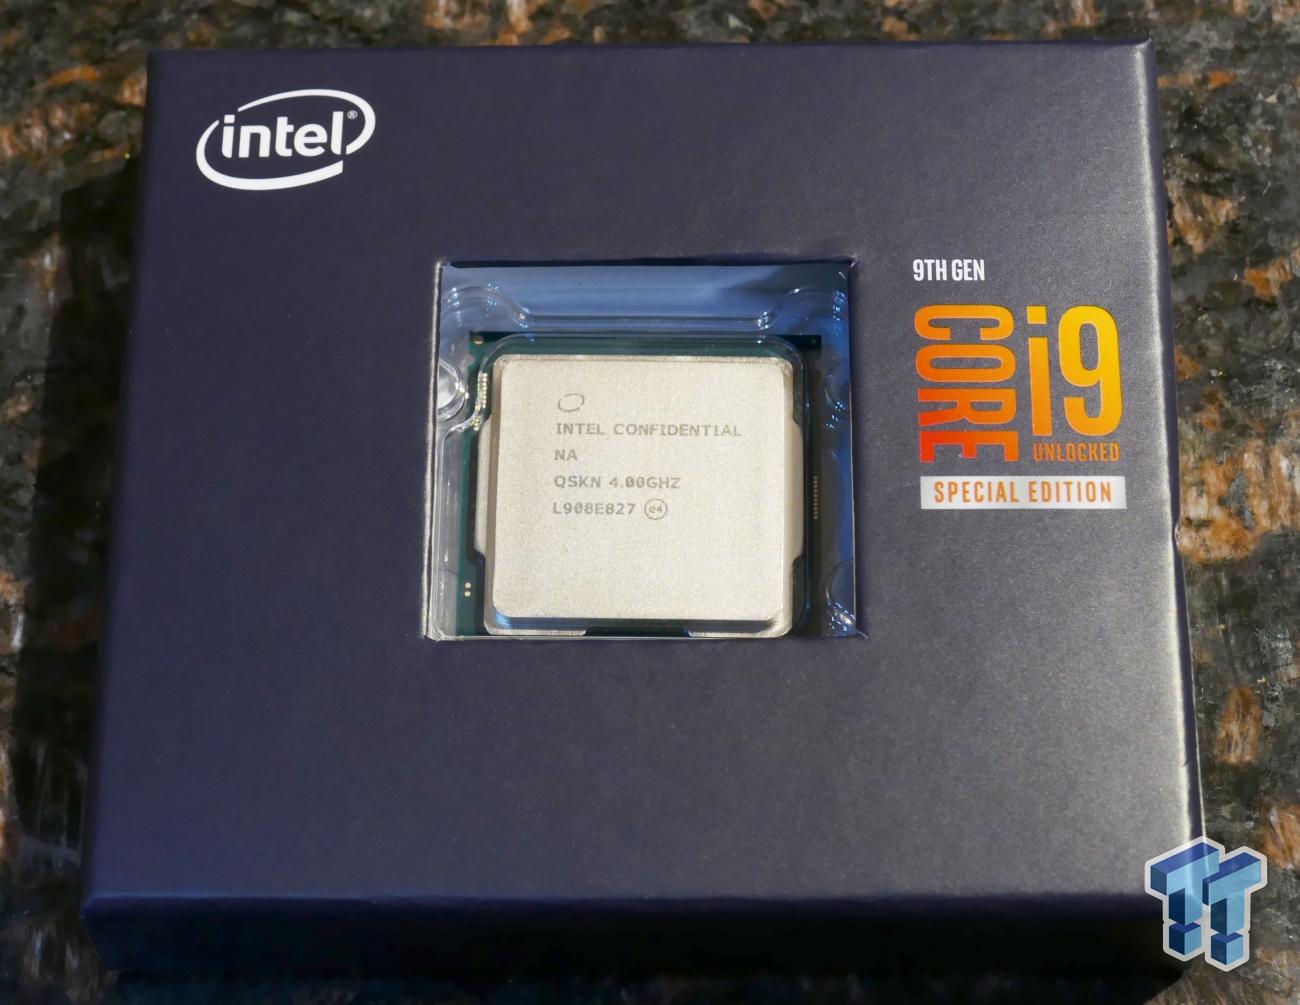 Intel Core i9-9900KS (Coffee Lake) Processor Review